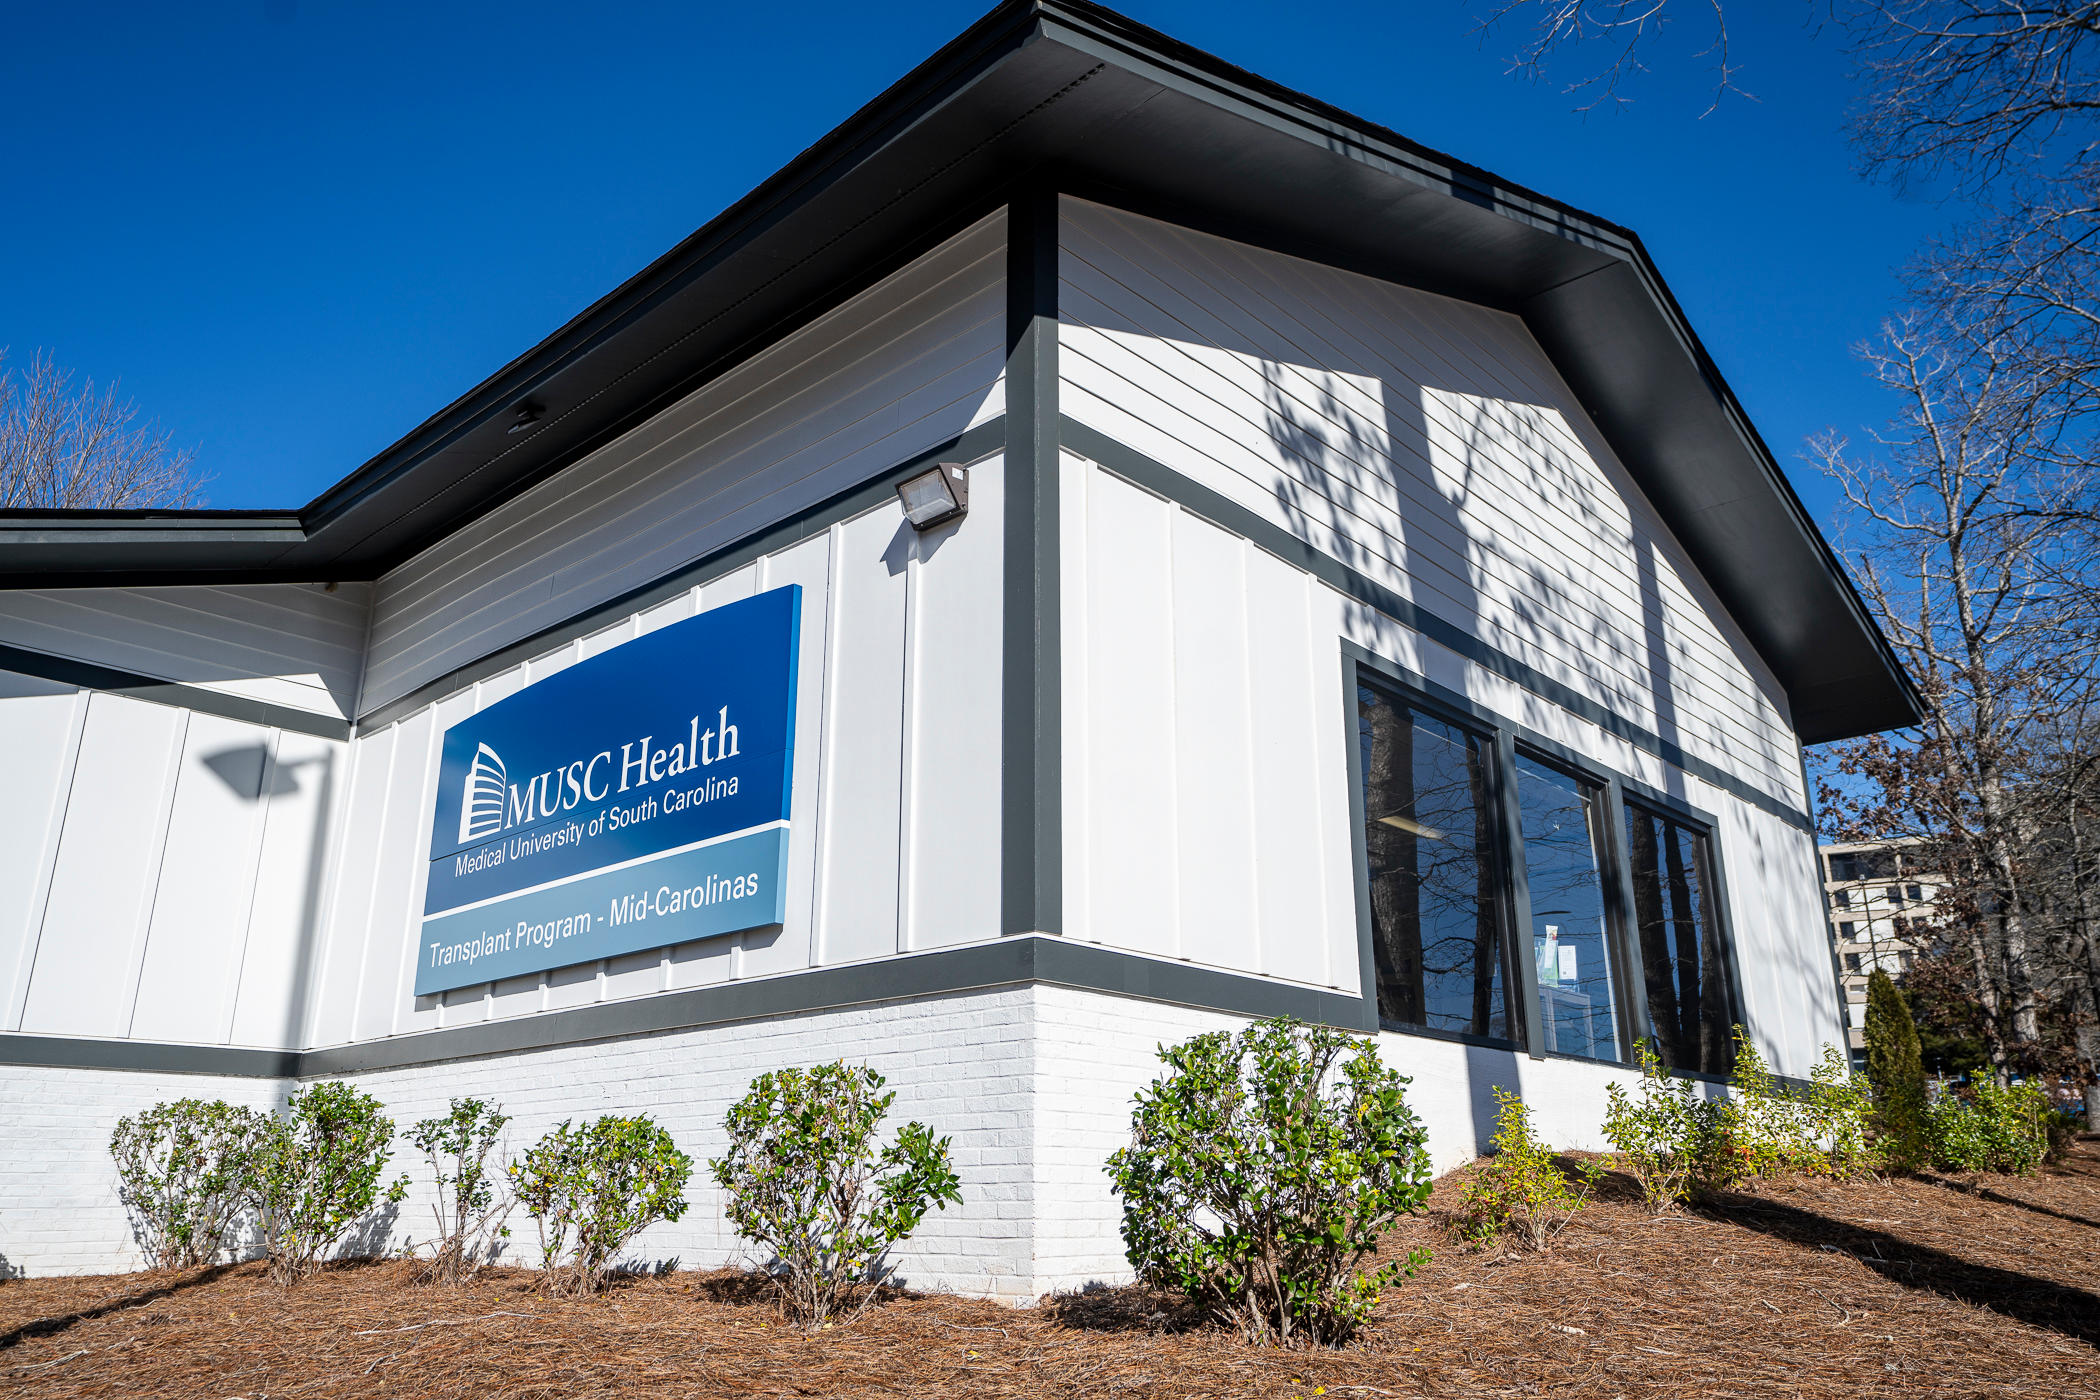 MUSC Health Transplant Program - Mid-Carolinas Exterior Building Close up